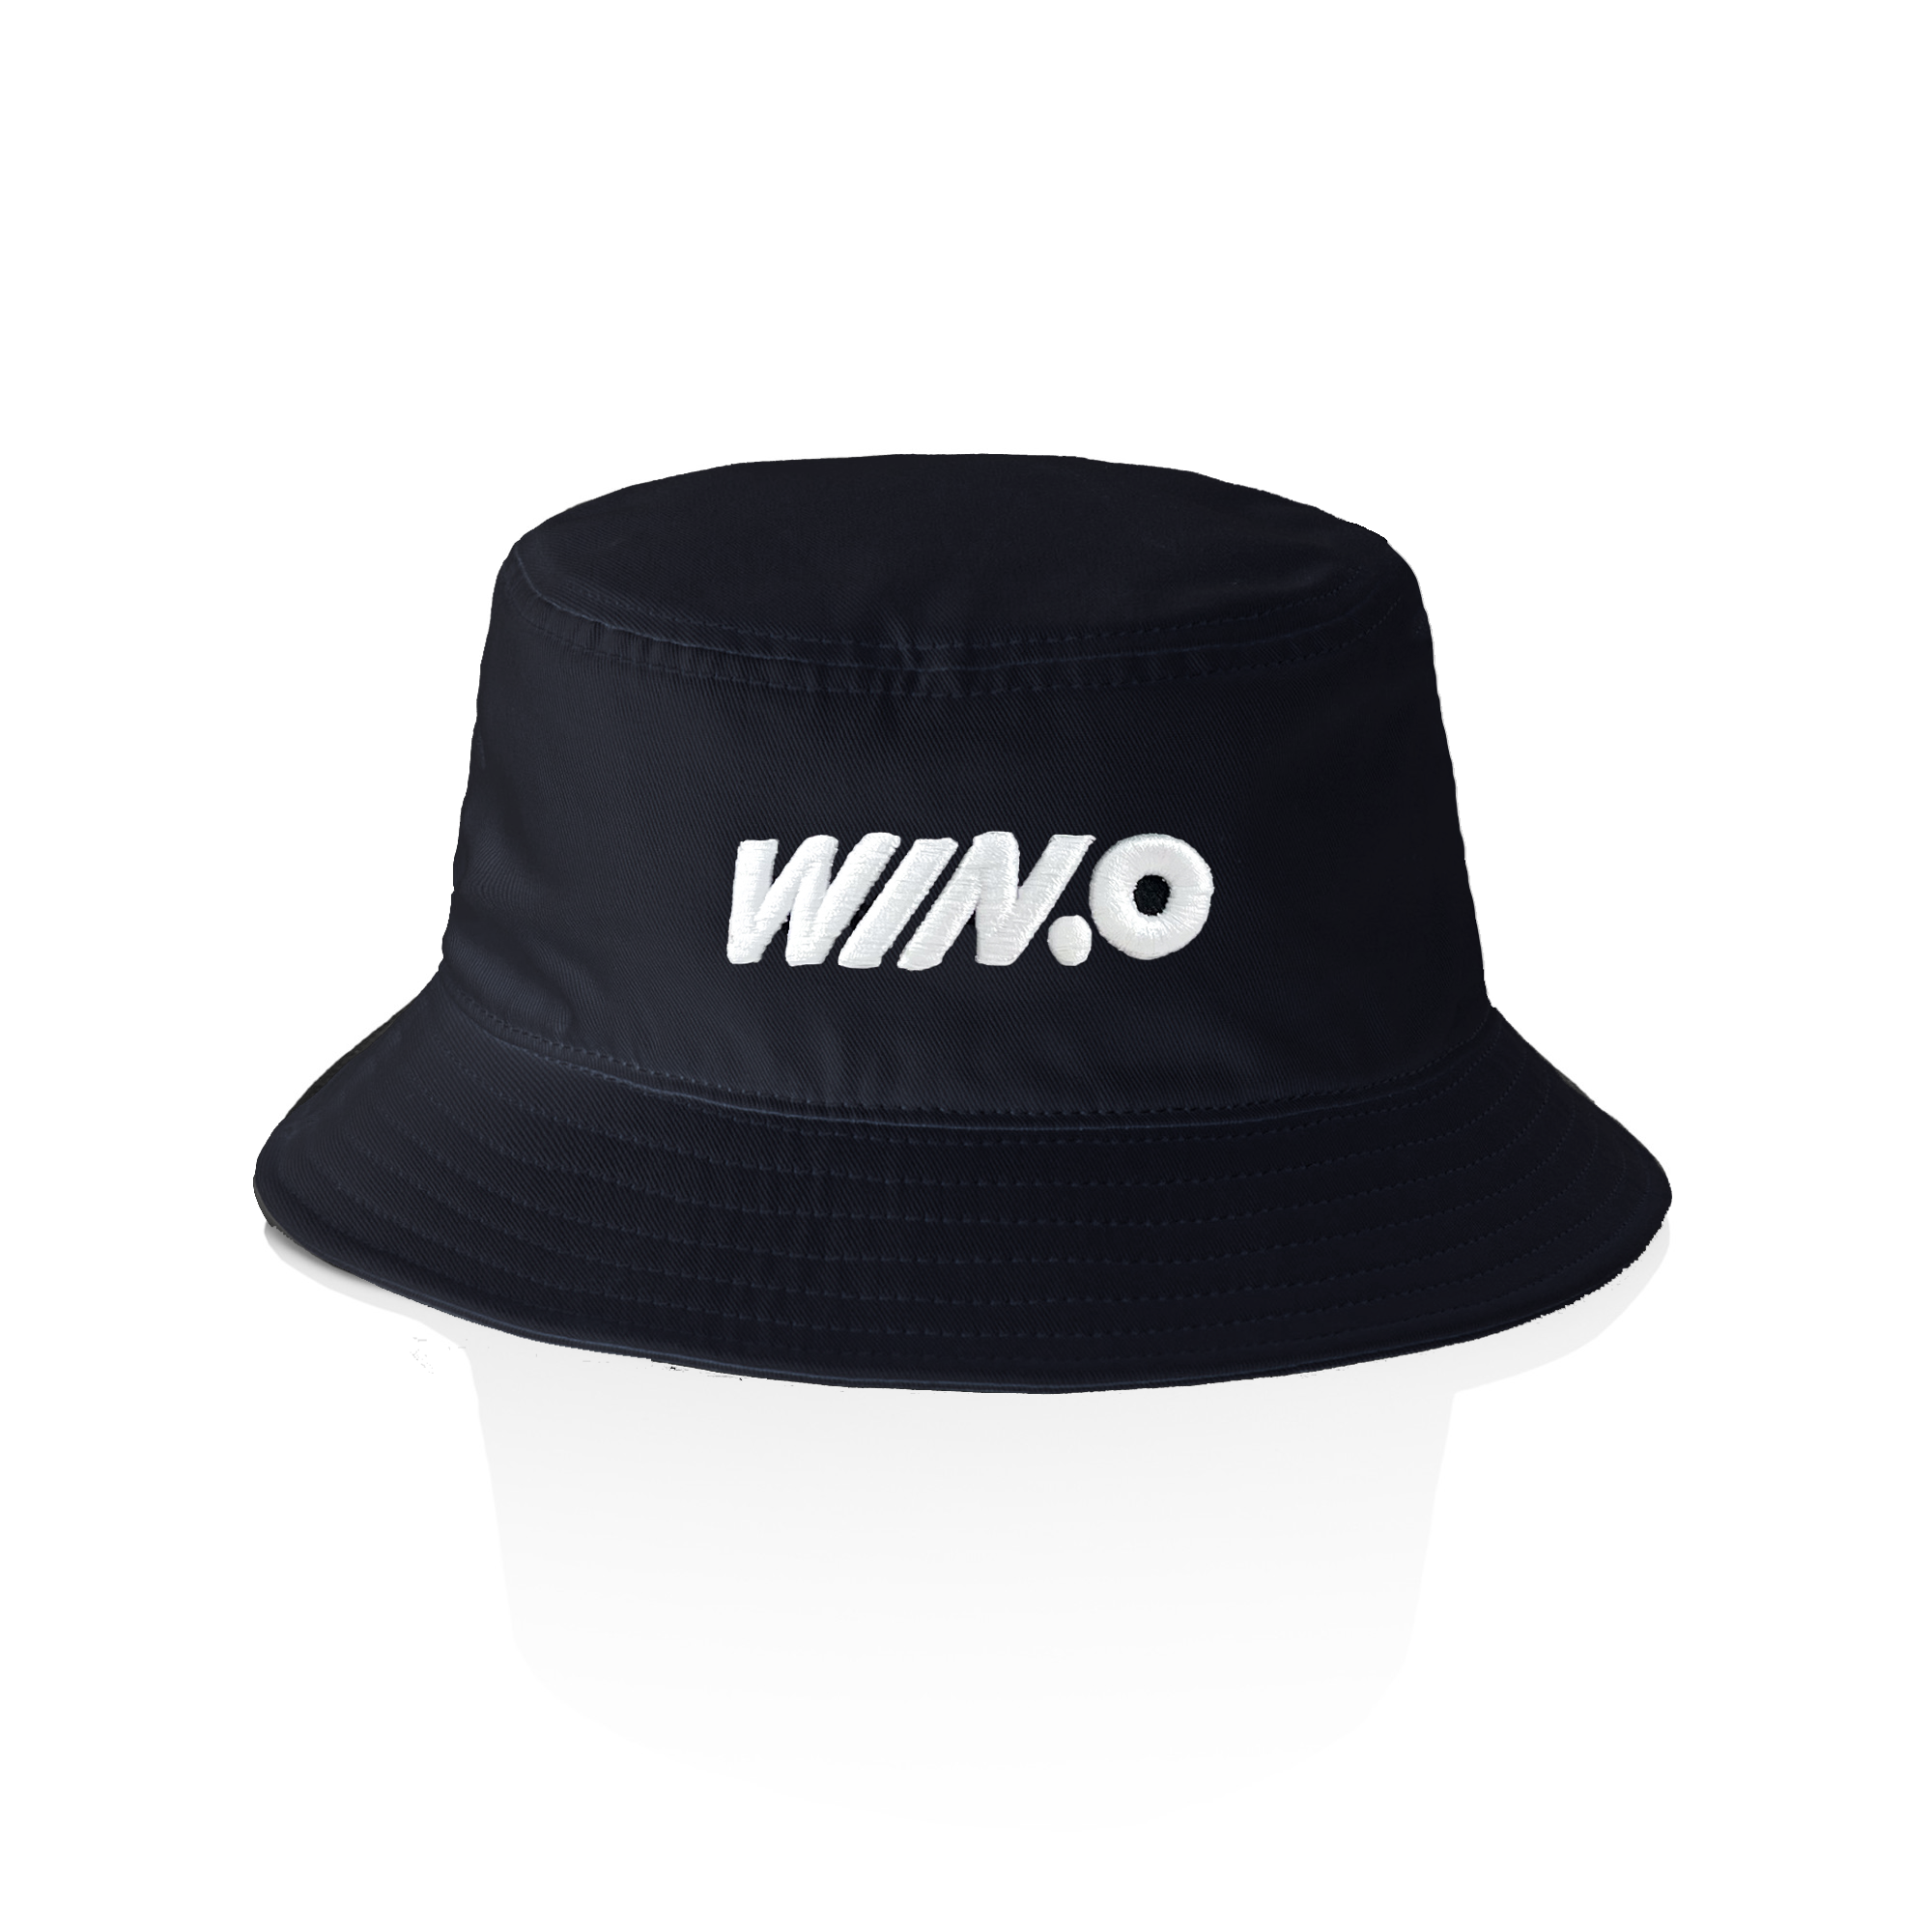 WIN.O Original Bucket Hat